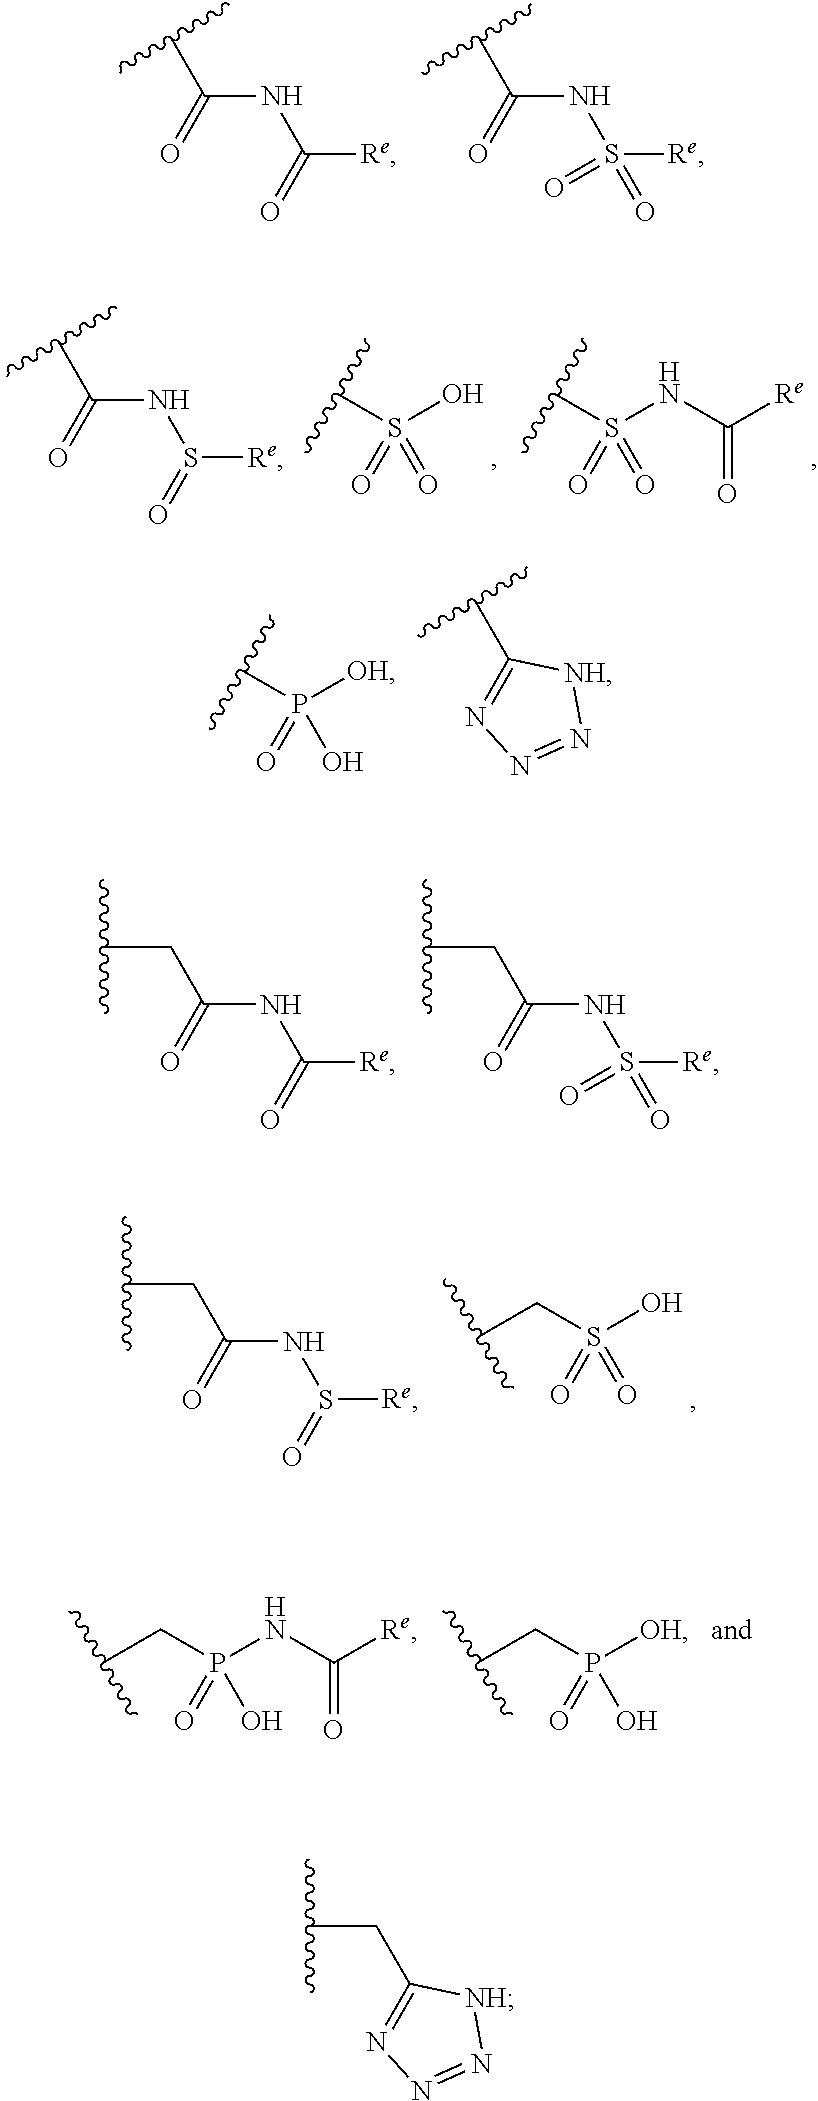 Cyclohexyl acid pyrazole azoles as lpa antagonists